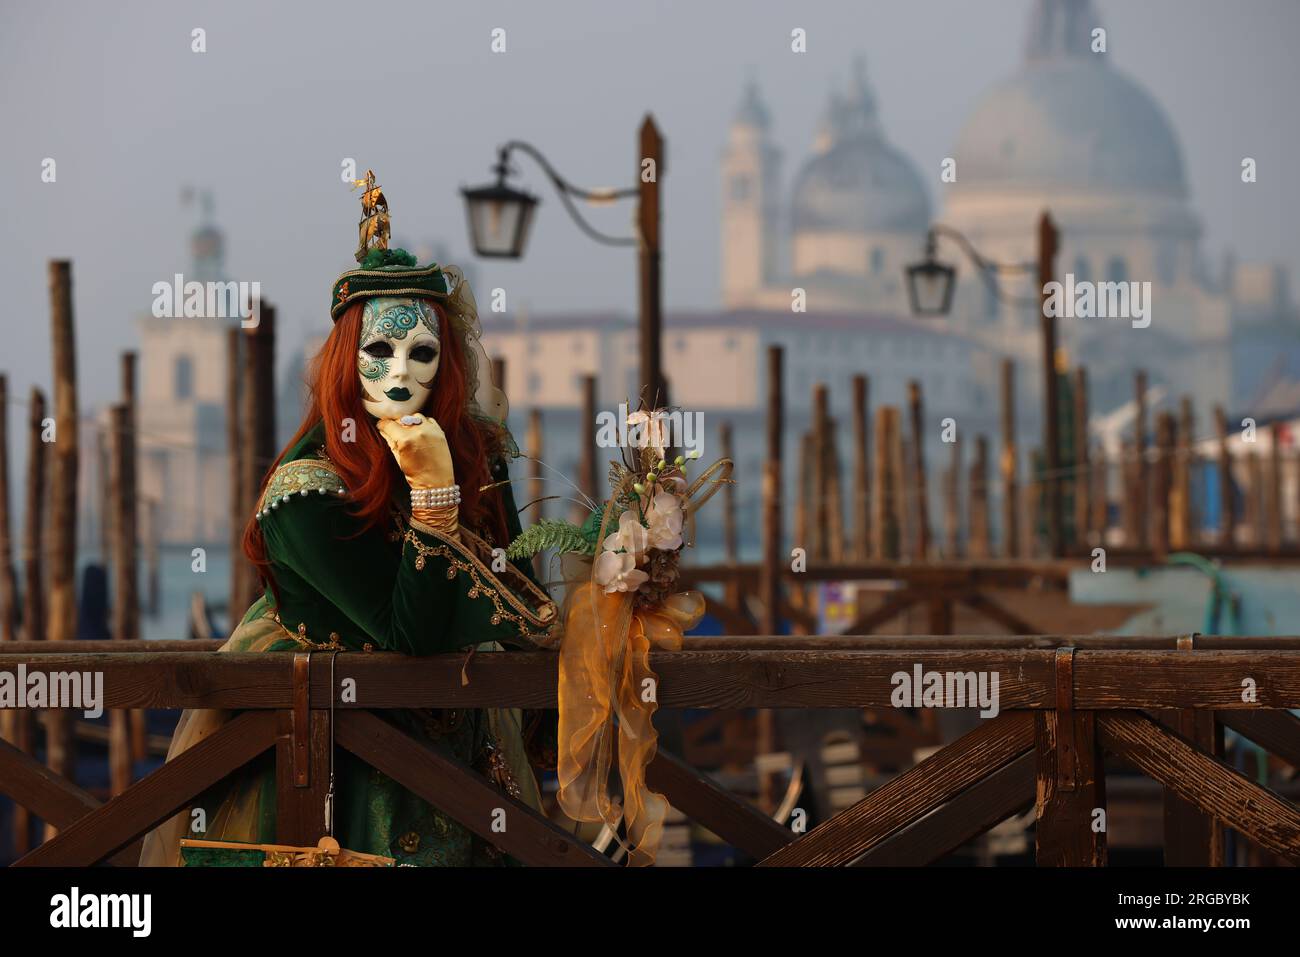 Karneval Venedig, Venedig Karneval,  Beauty, Carnevale di Venezia,  Masken in Venedig,  Venedig Frau,  Masken, Kostüme, Kleidern und schönen Frauen Stock Photo